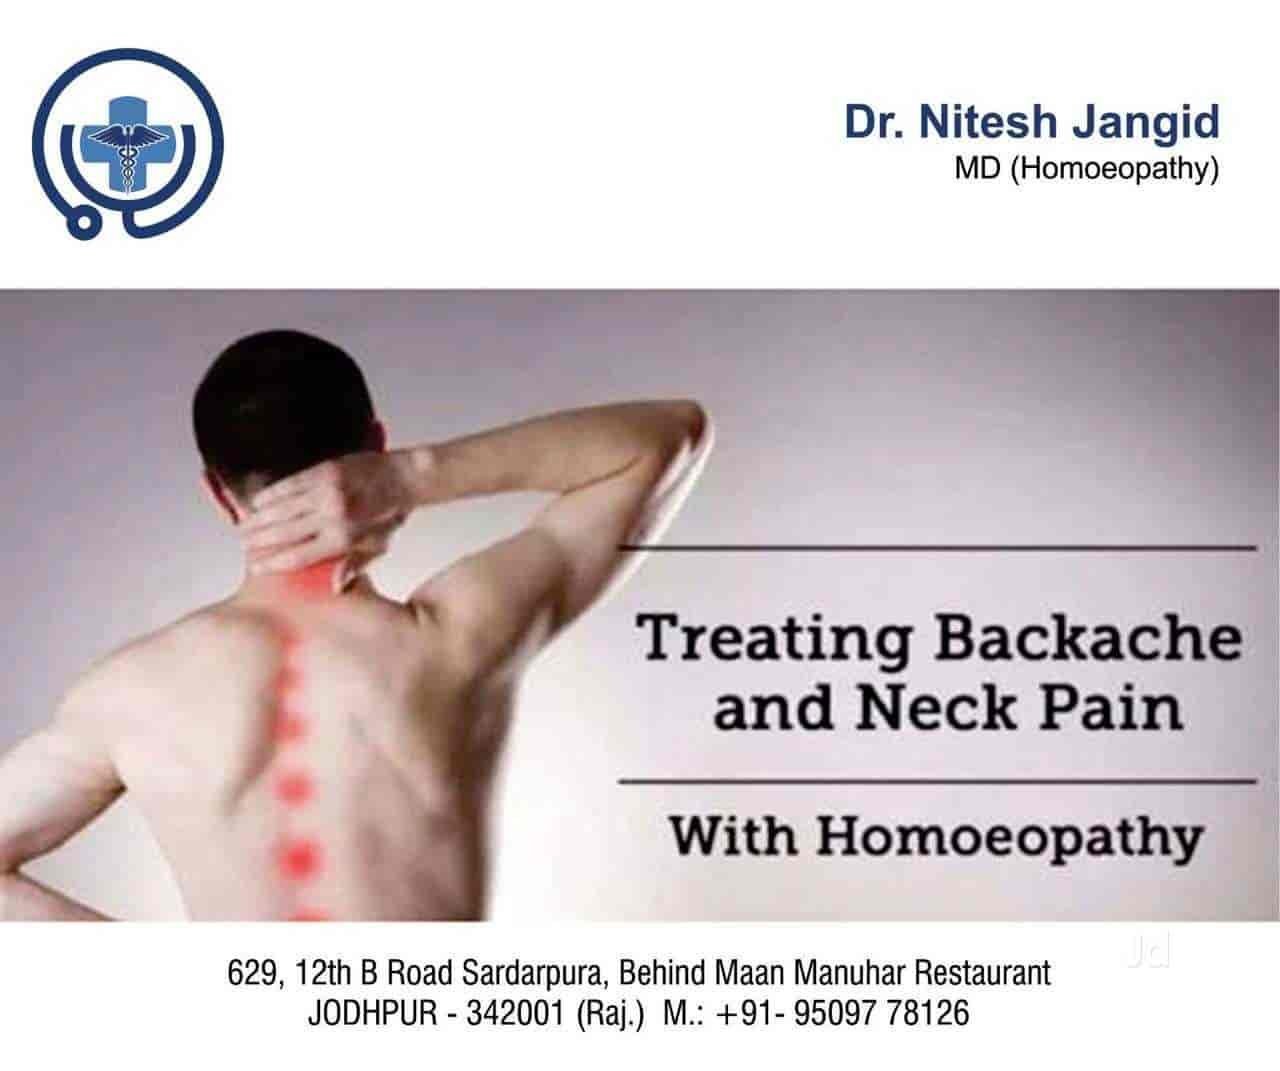 Dr. Nitesh Jangid MD Homoeopathy